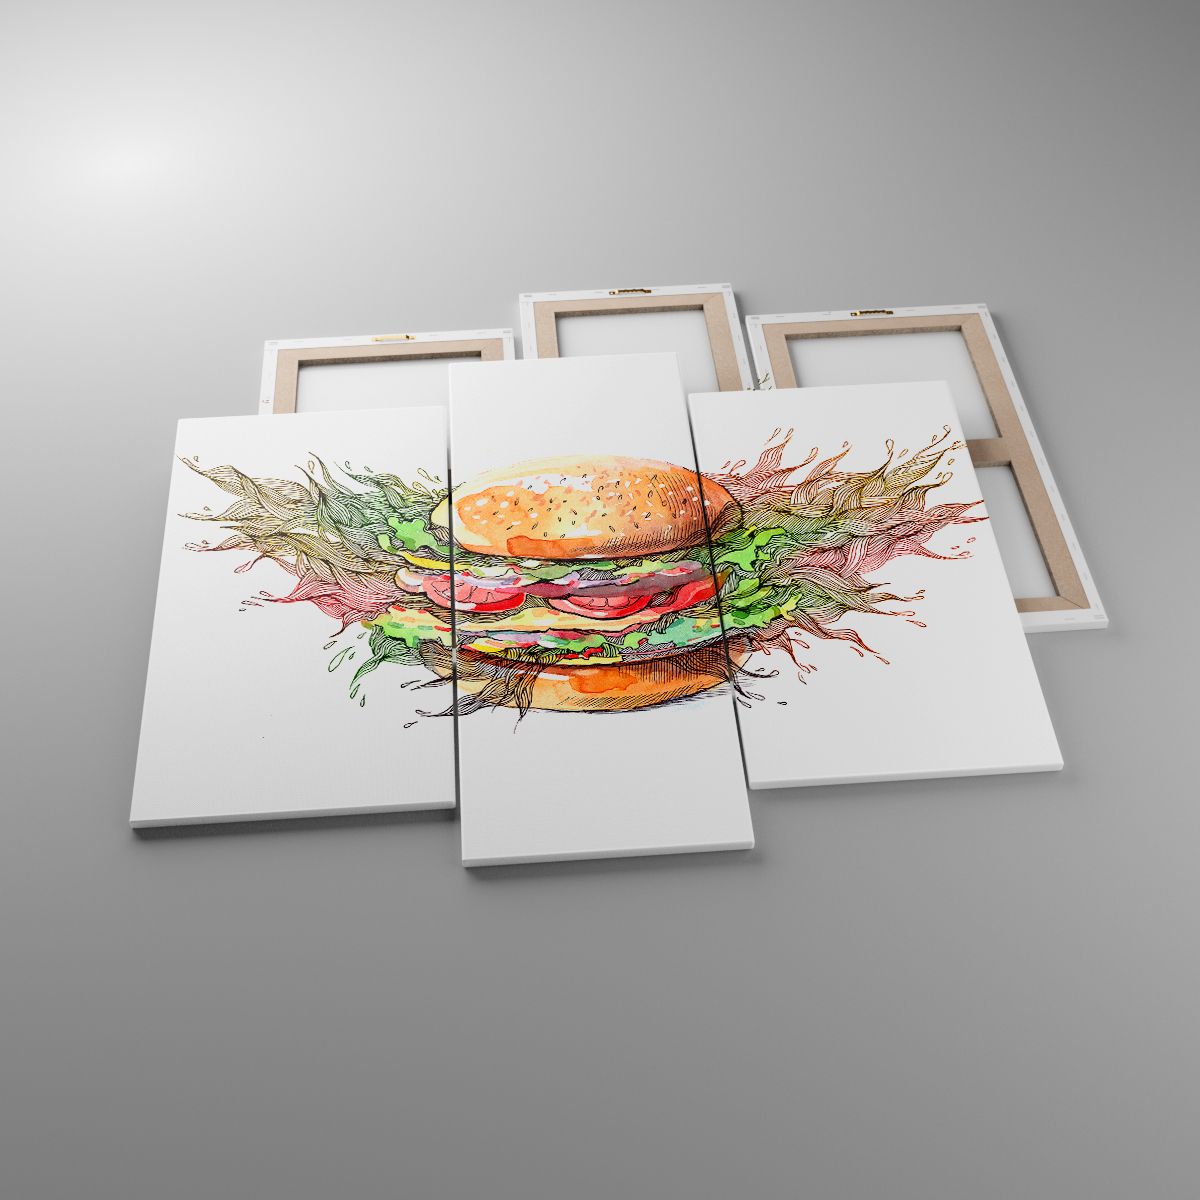 Obrazy Gastronomia, Obrazy Hamburger, Obrazy Kulinaria, Obrazy Kuchnia, Obrazy Fast Food